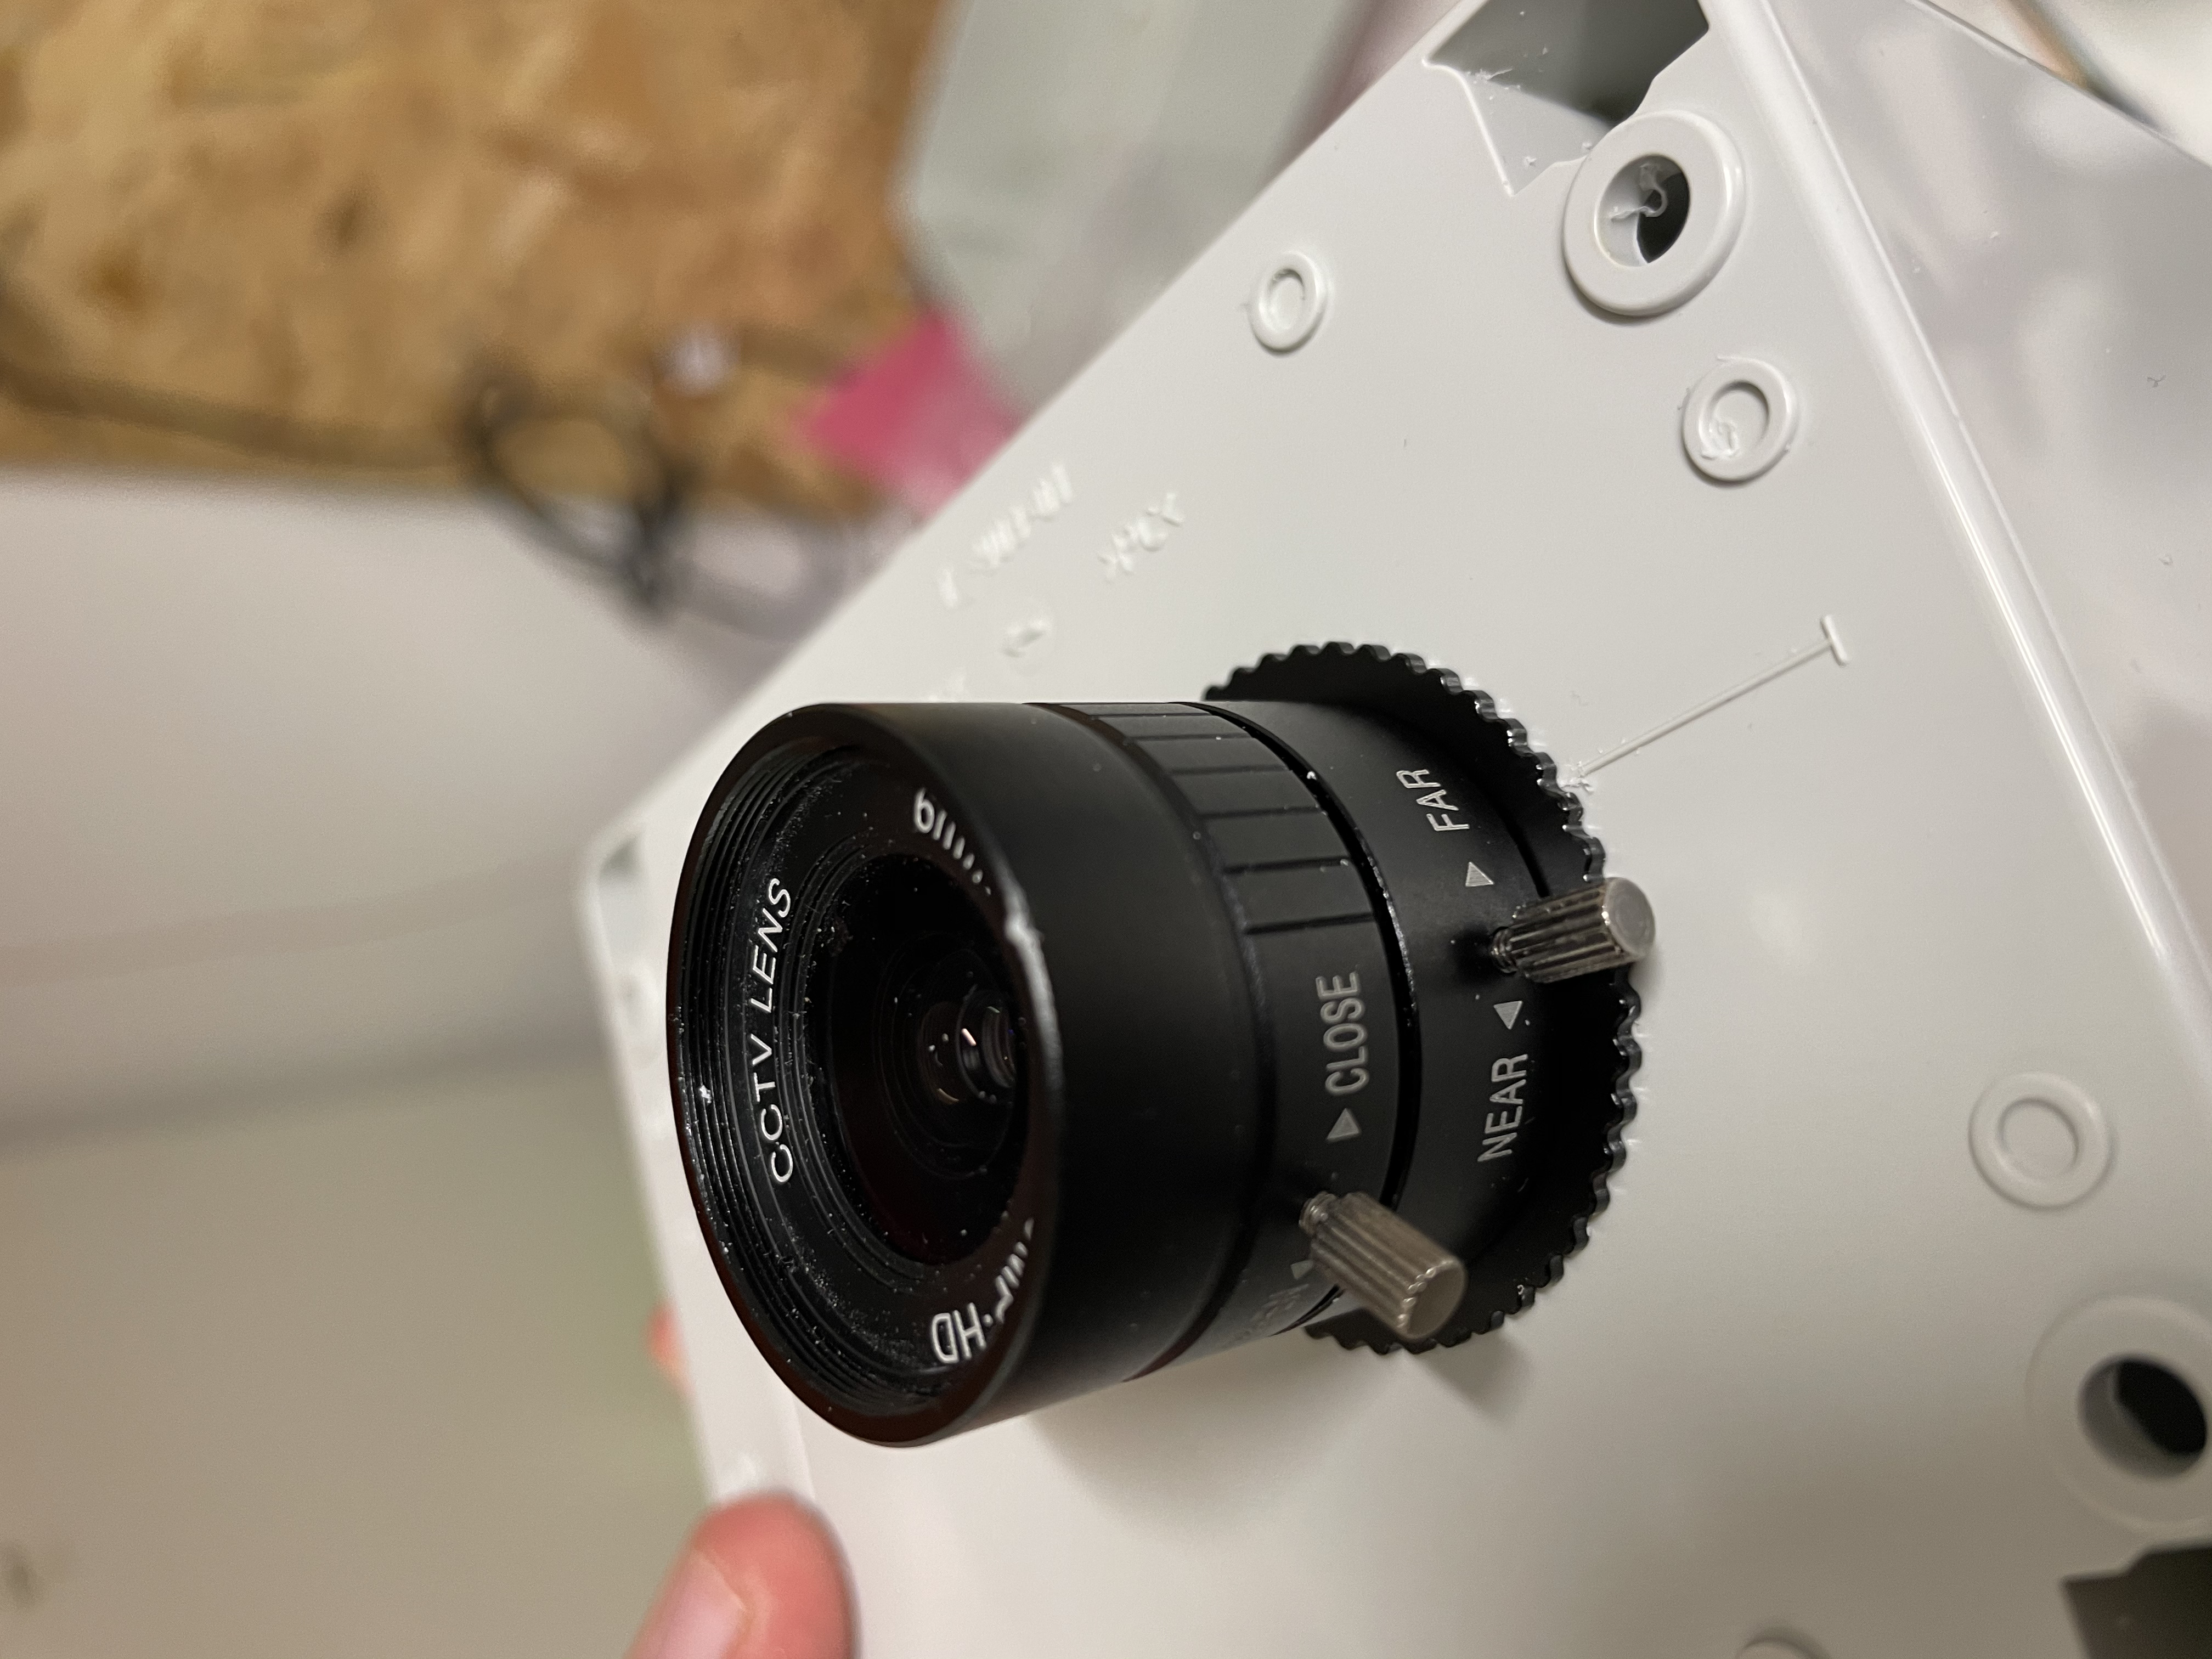 BatRack - install the camera in the box